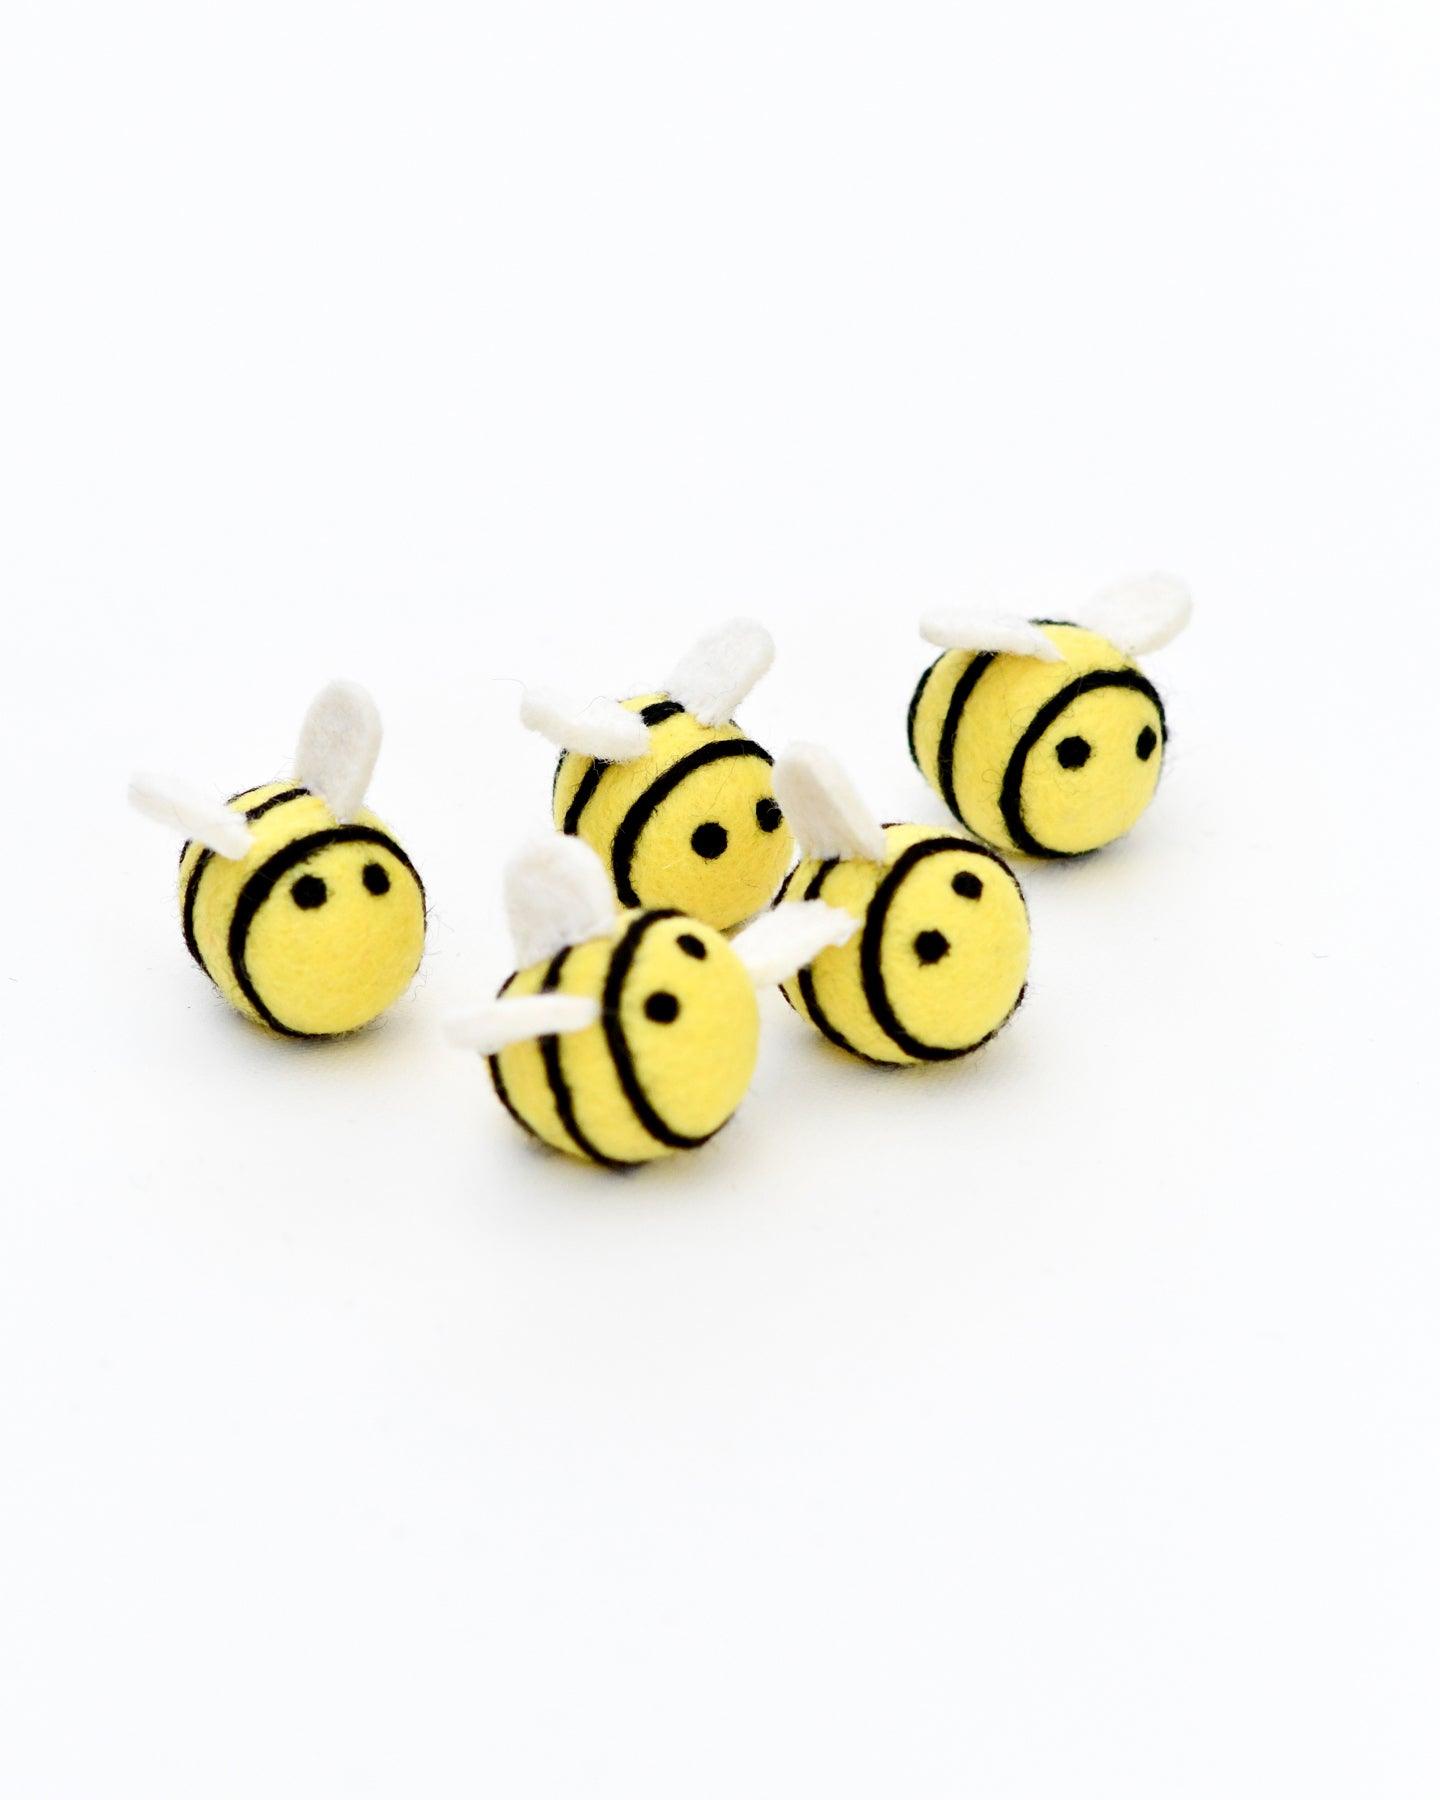 Felt Bees Loose Parts - 5 Bees - Tara Treasures